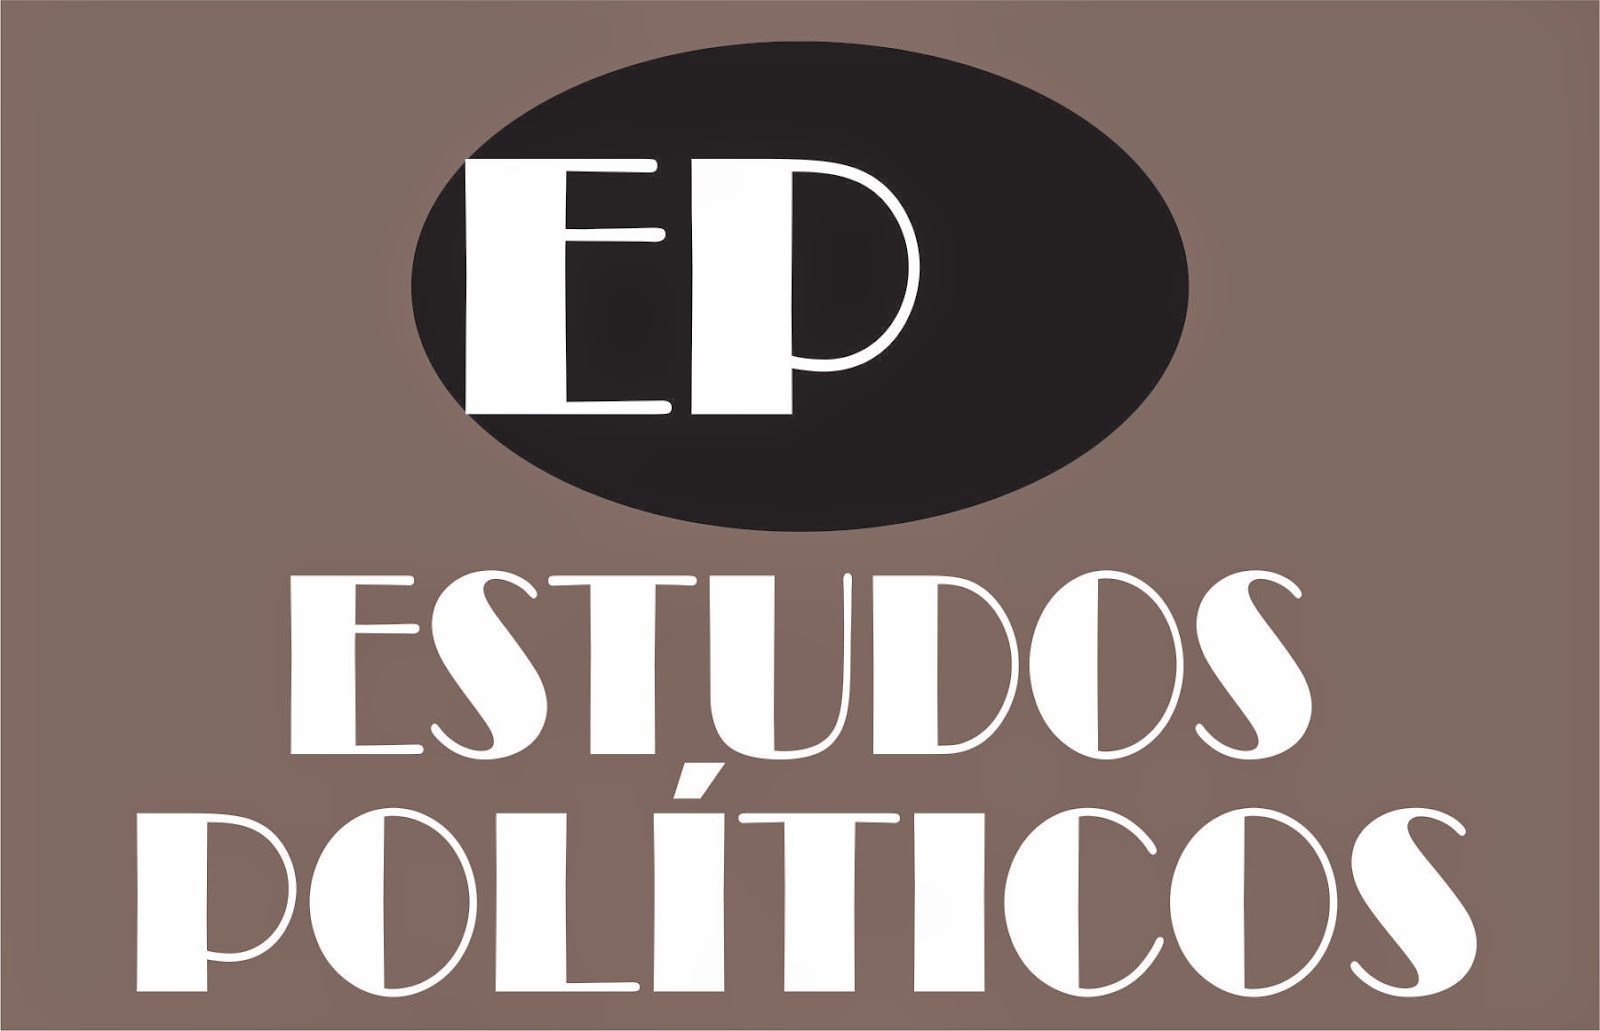 http://politicaep.blogspot.com.br/